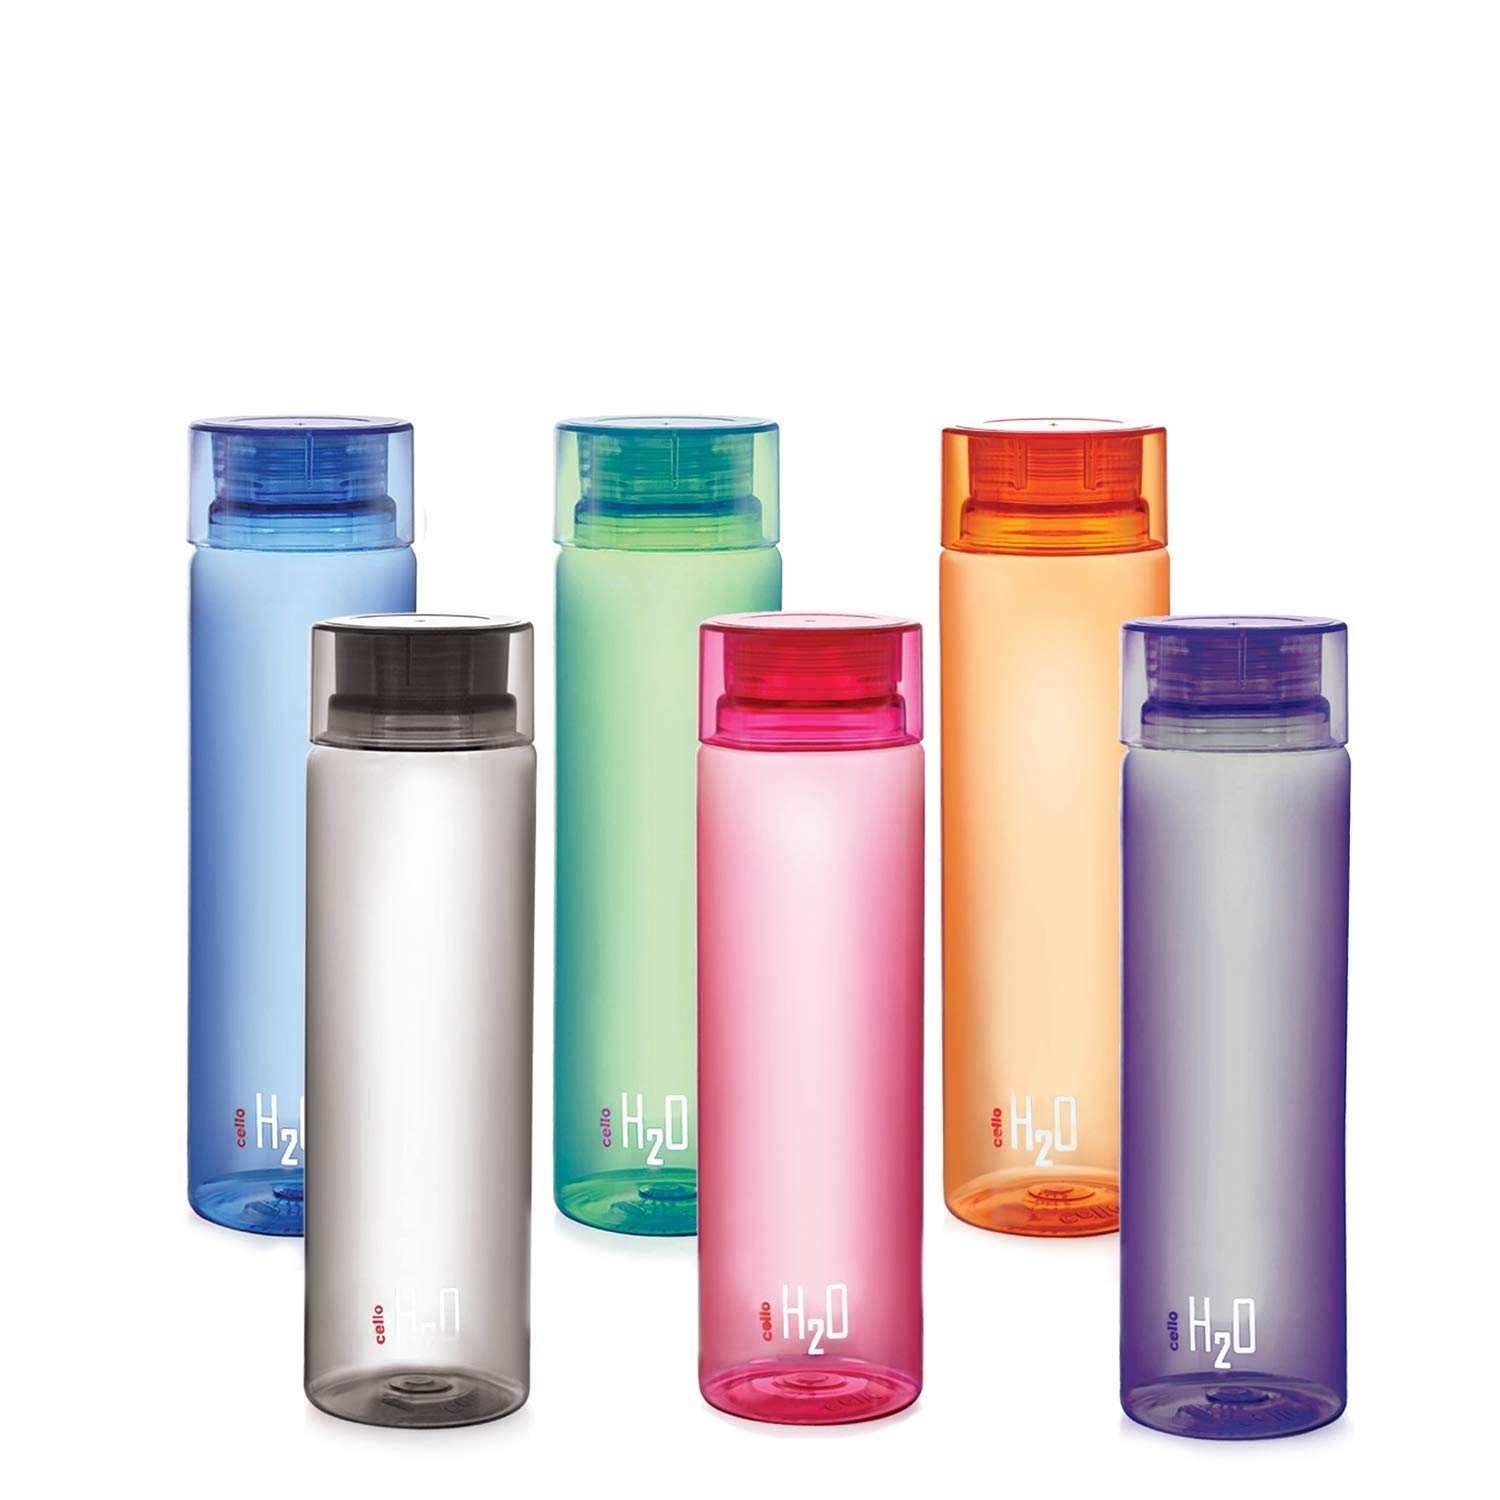 Cello H2O Unbreakable Round Plastic Water Bottle 1 Liter | Leak proof & break-proof for Gym/Picnic/Home/Fridge - 6 pcs